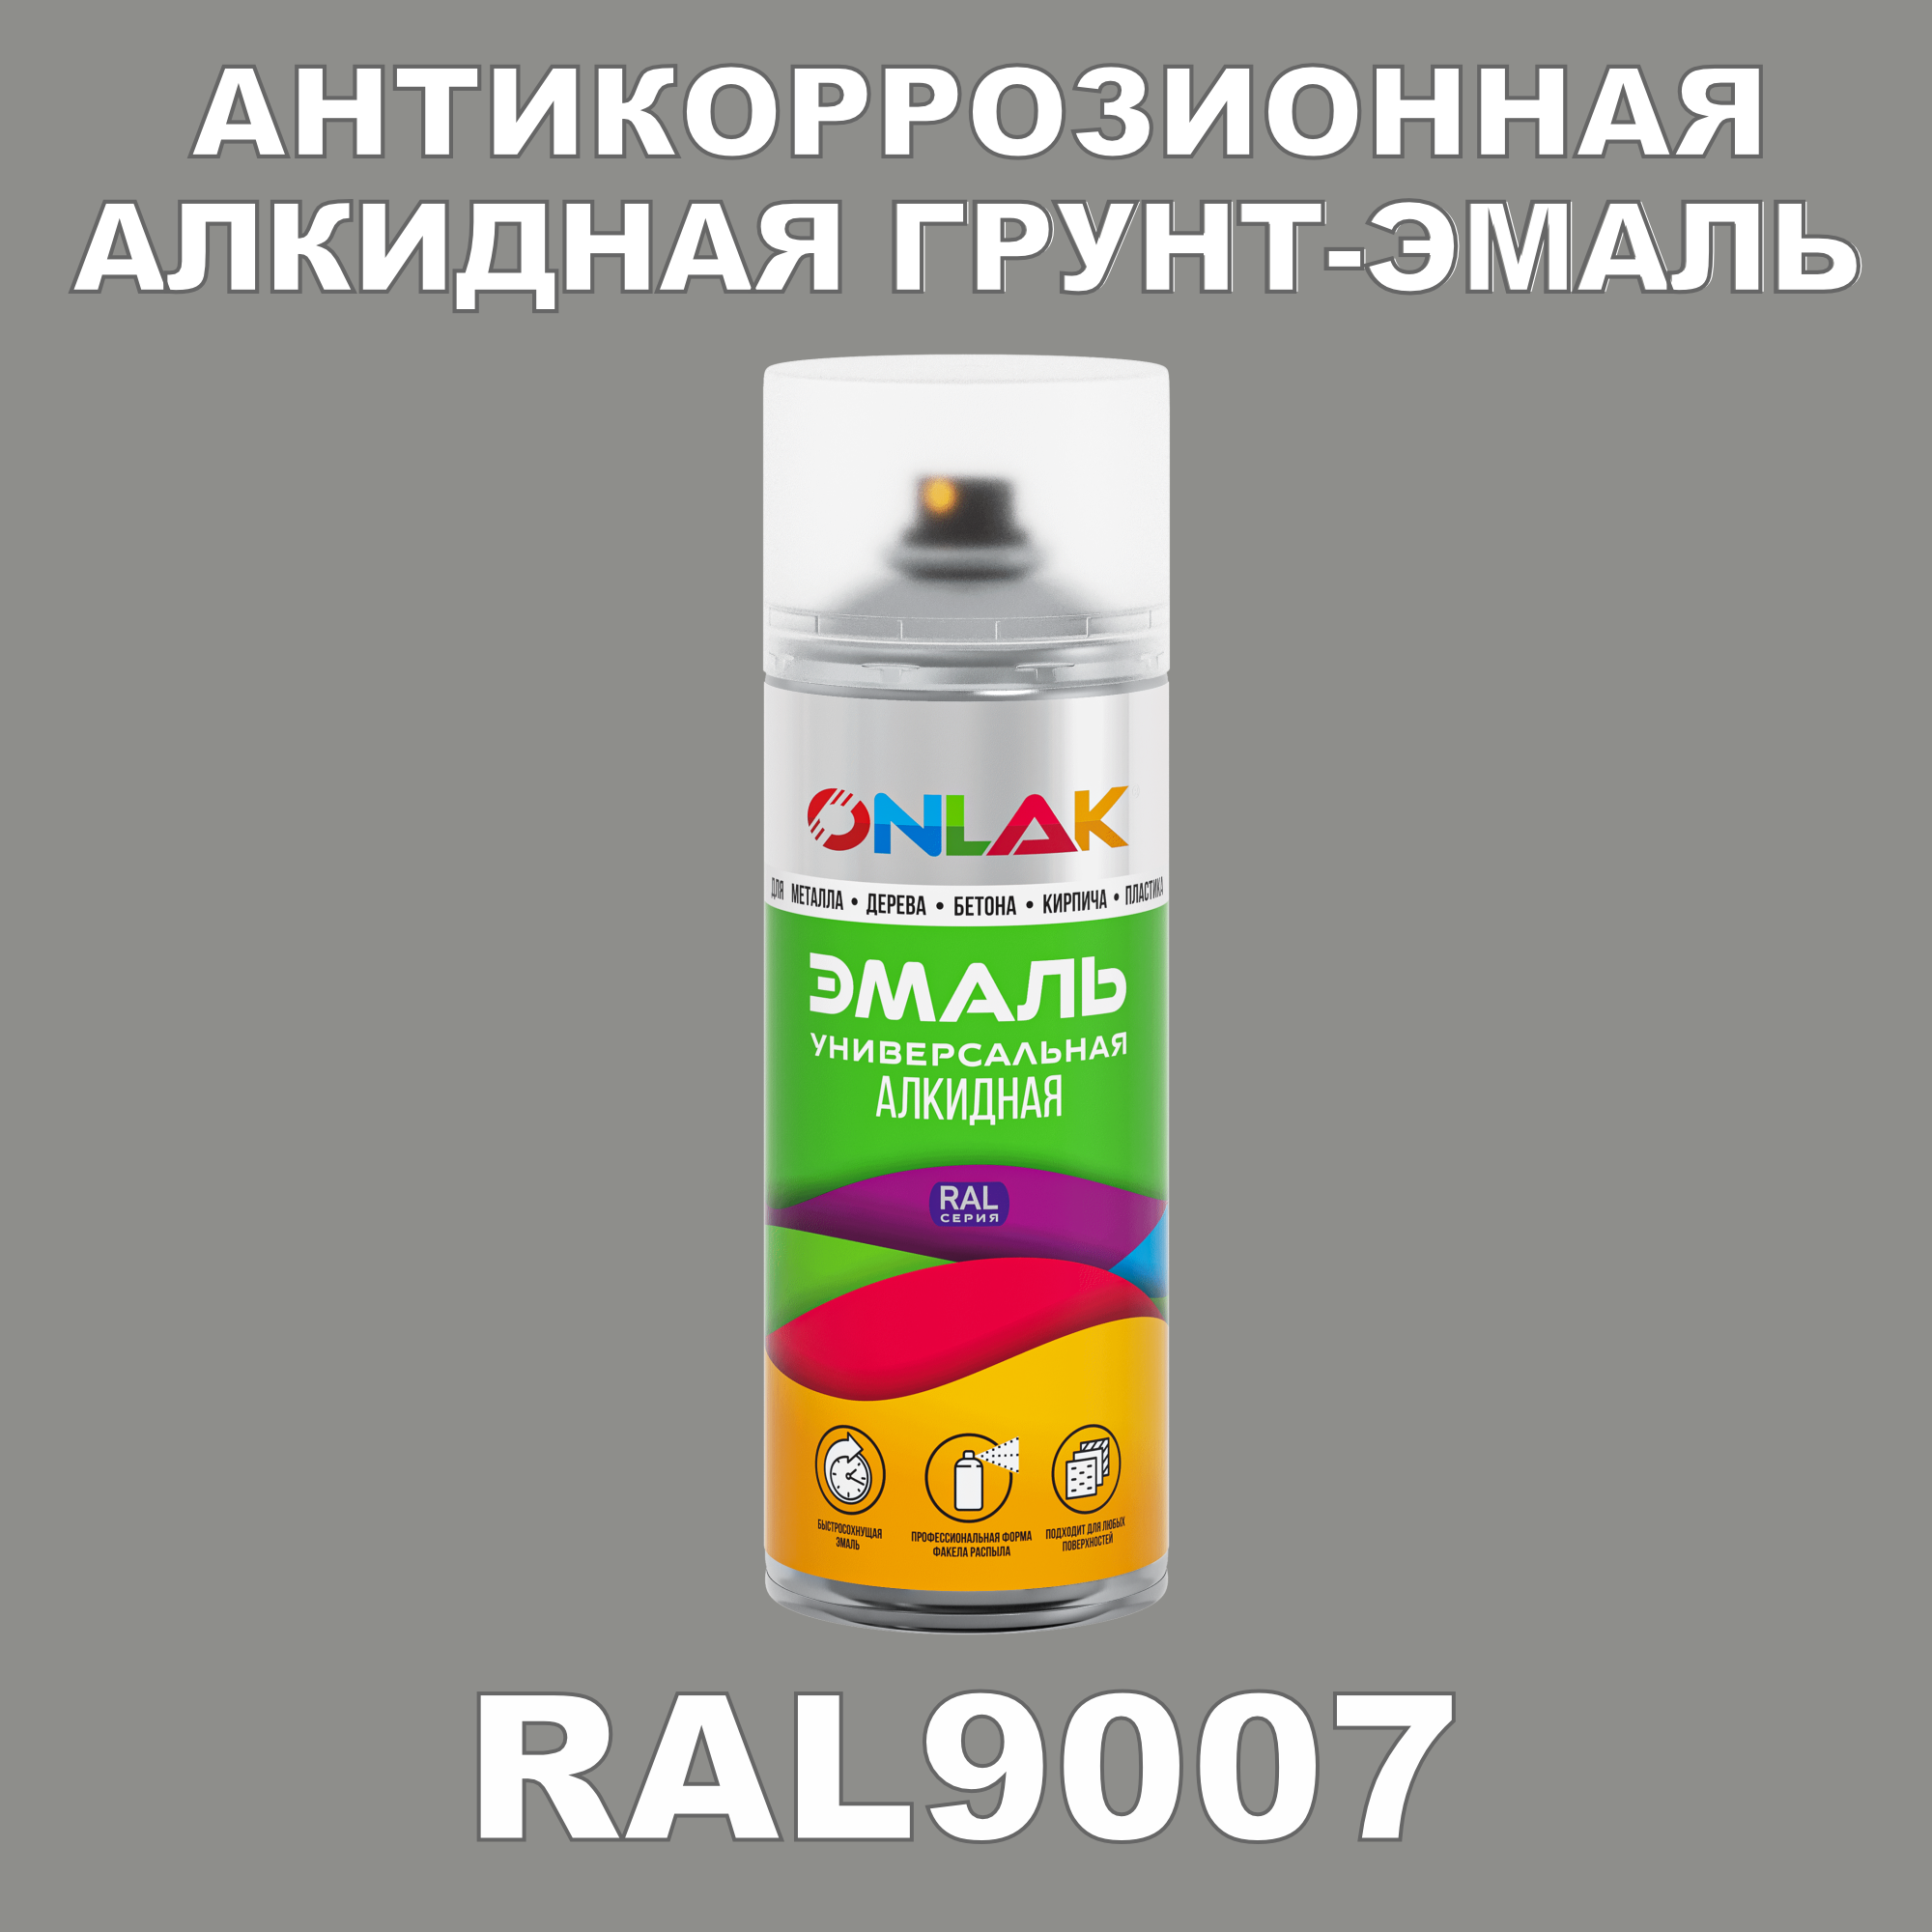 Антикоррозионная грунт-эмаль ONLAK RAL 9007,белый,622 мл